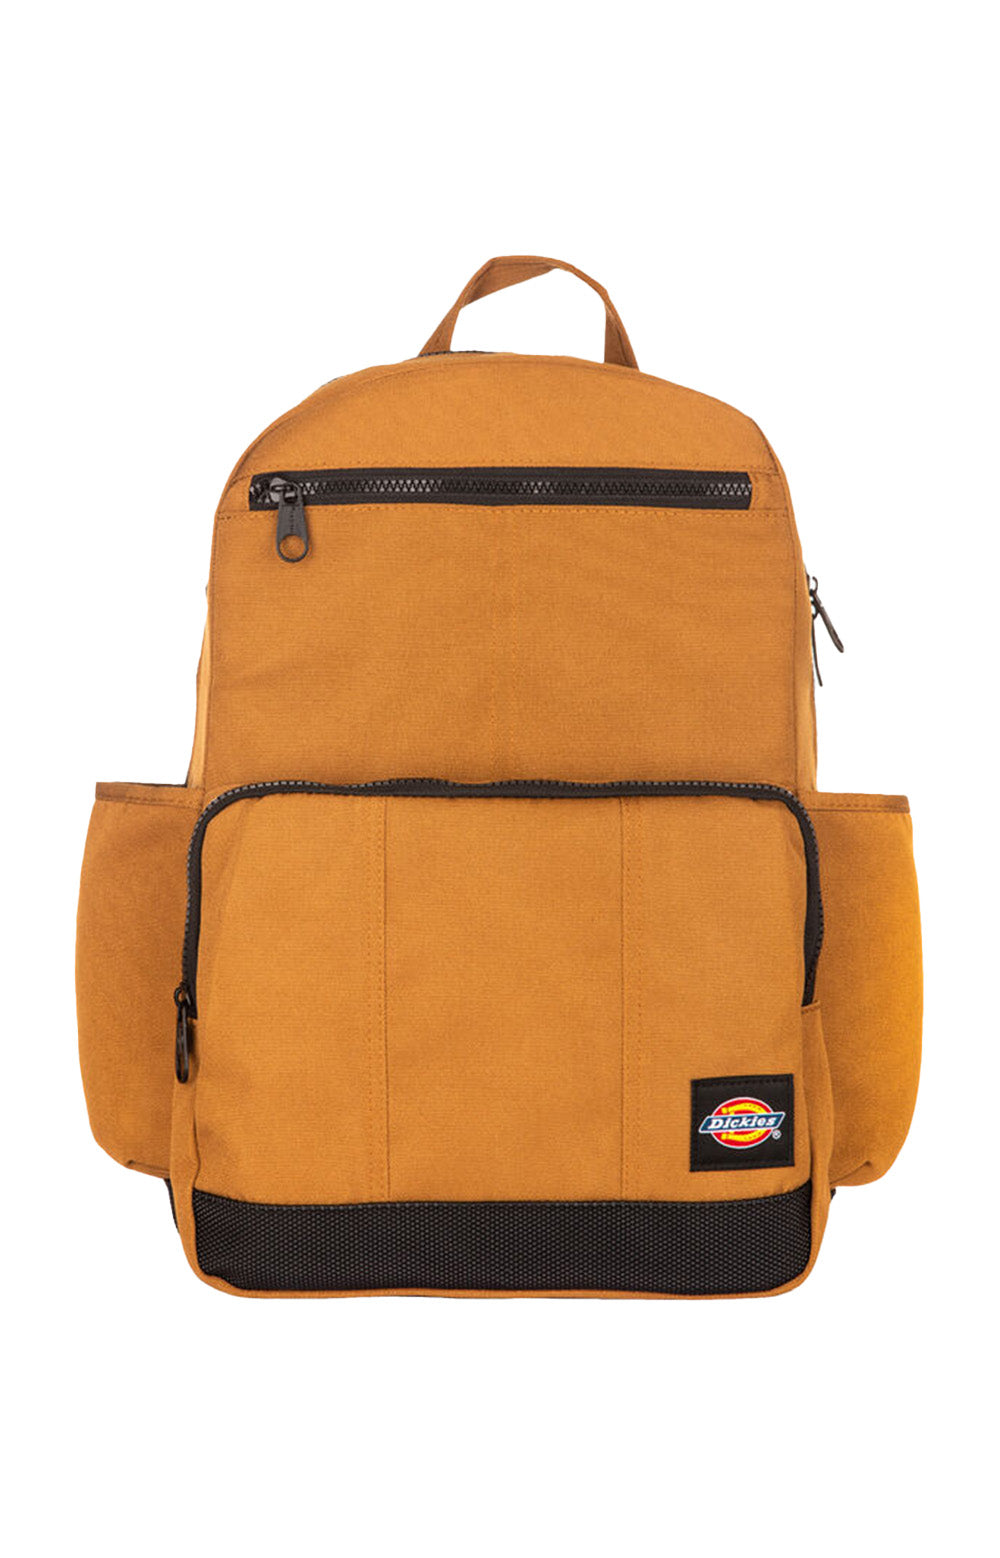 Journeyman Backpack - Brown Duck